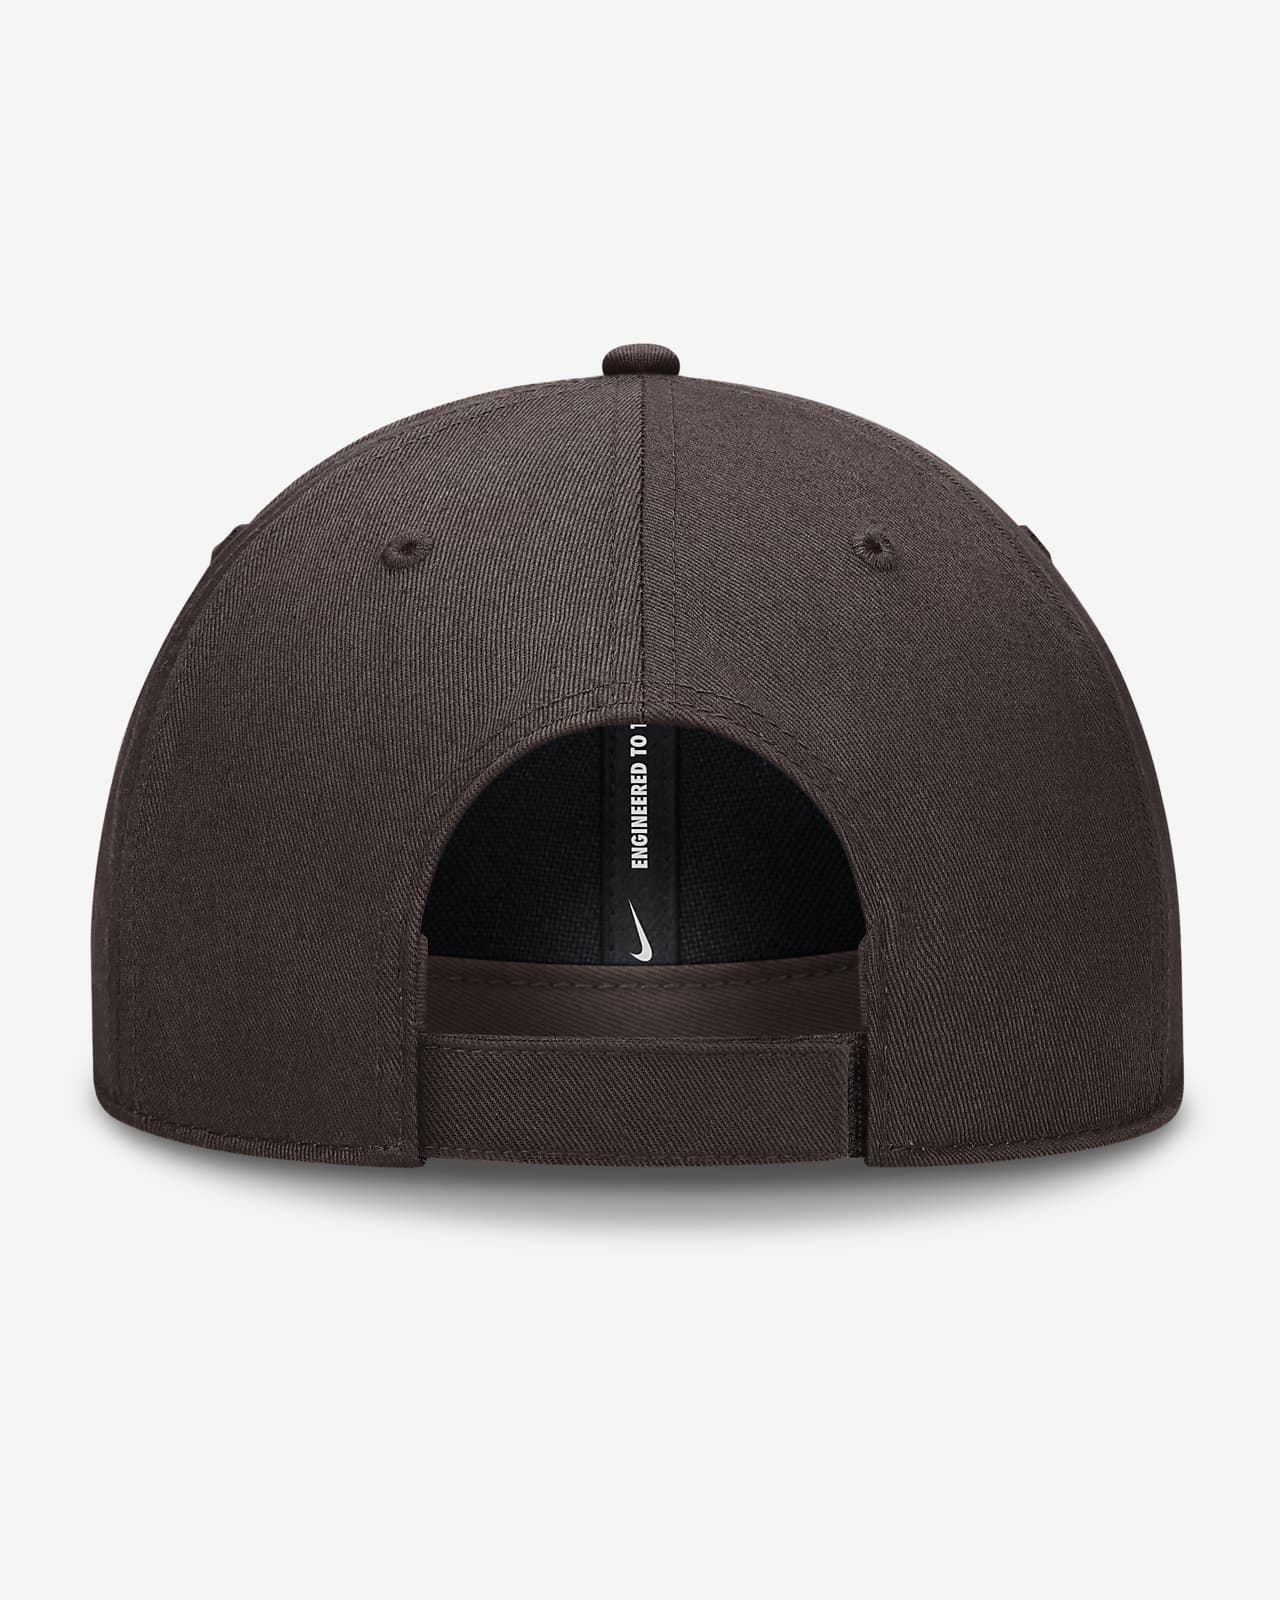 New York Mets Evergreen Club Men's Nike Dri-FIT MLB Adjustable Hat